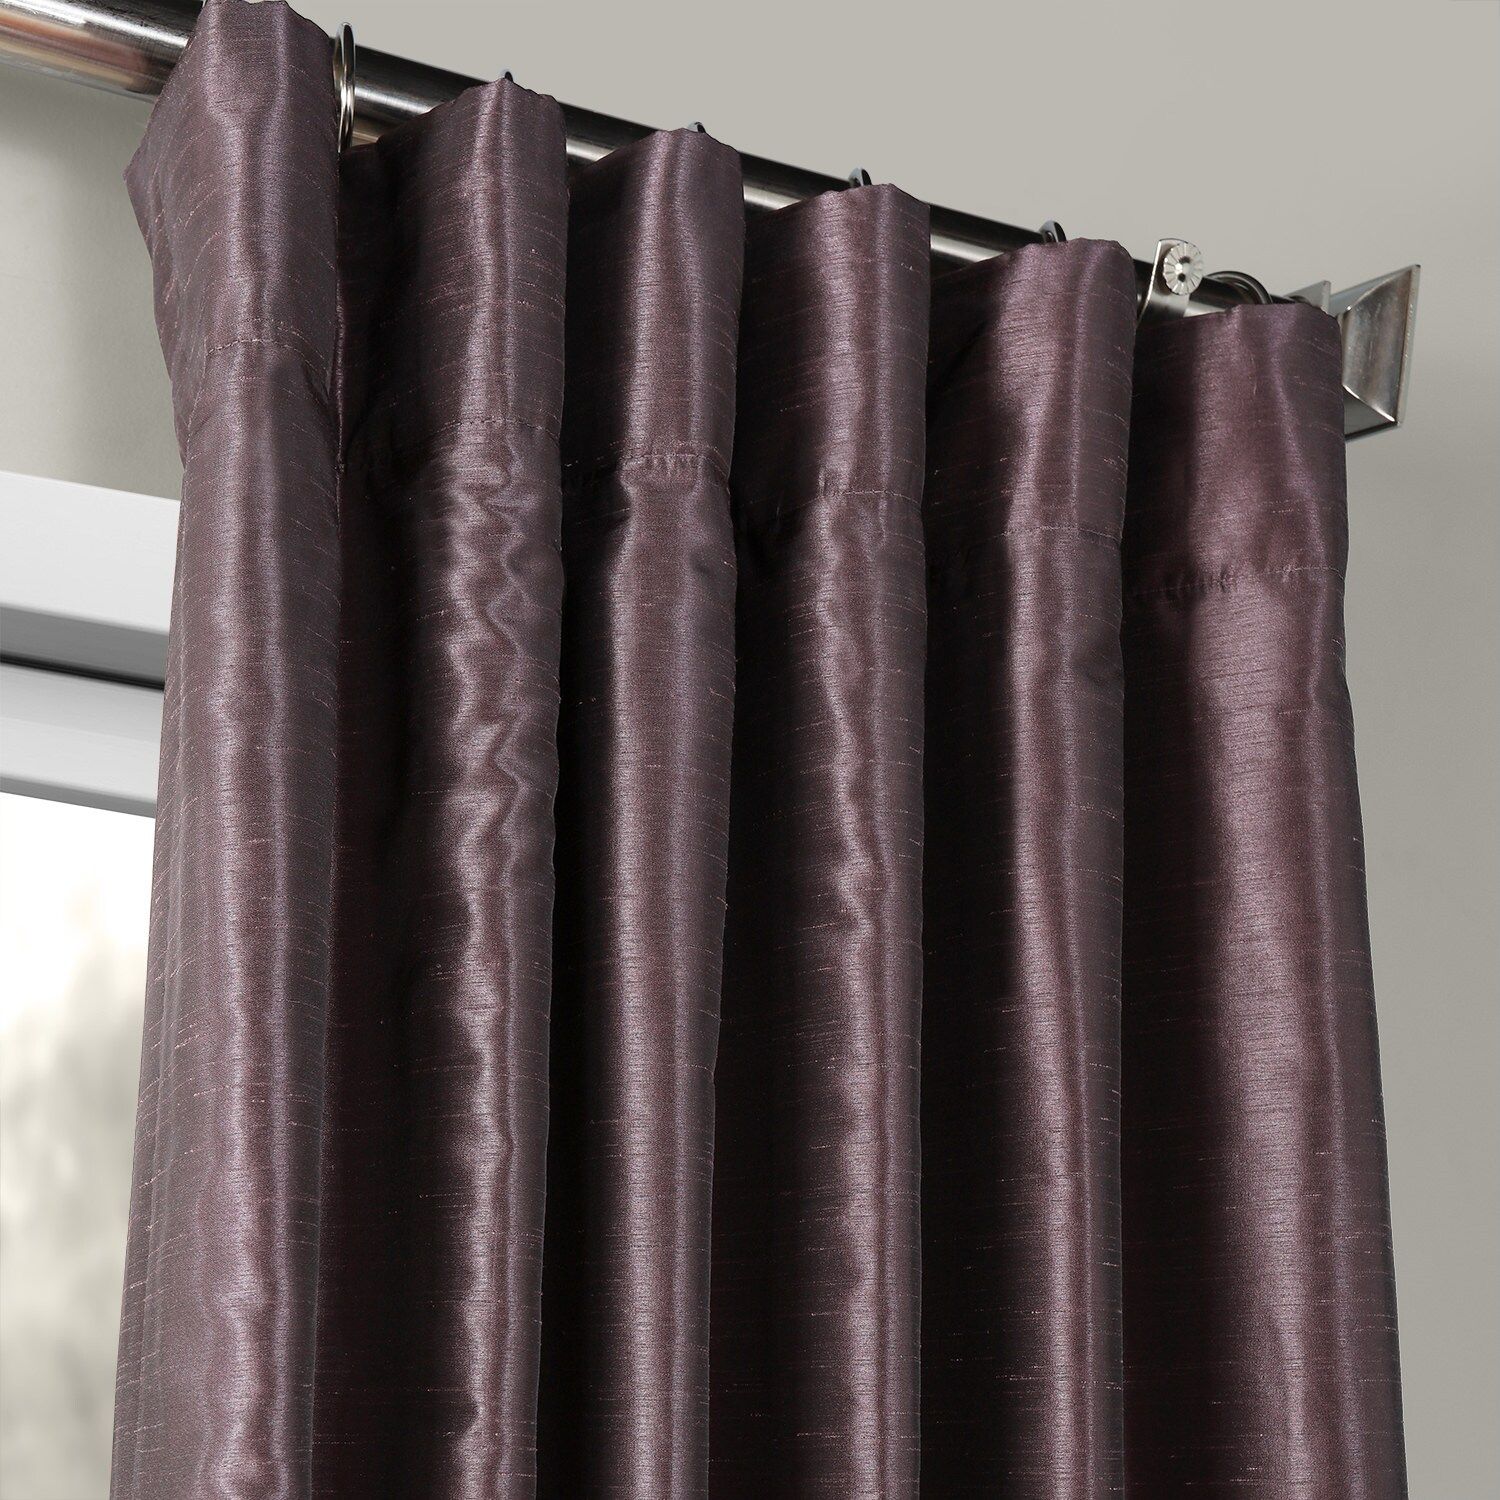 Dark Grape Vintage Textured Faux Dupioni Silk Curtain Intended For Vintage Textured Faux Dupioni Silk Curtain Panels (View 8 of 30)